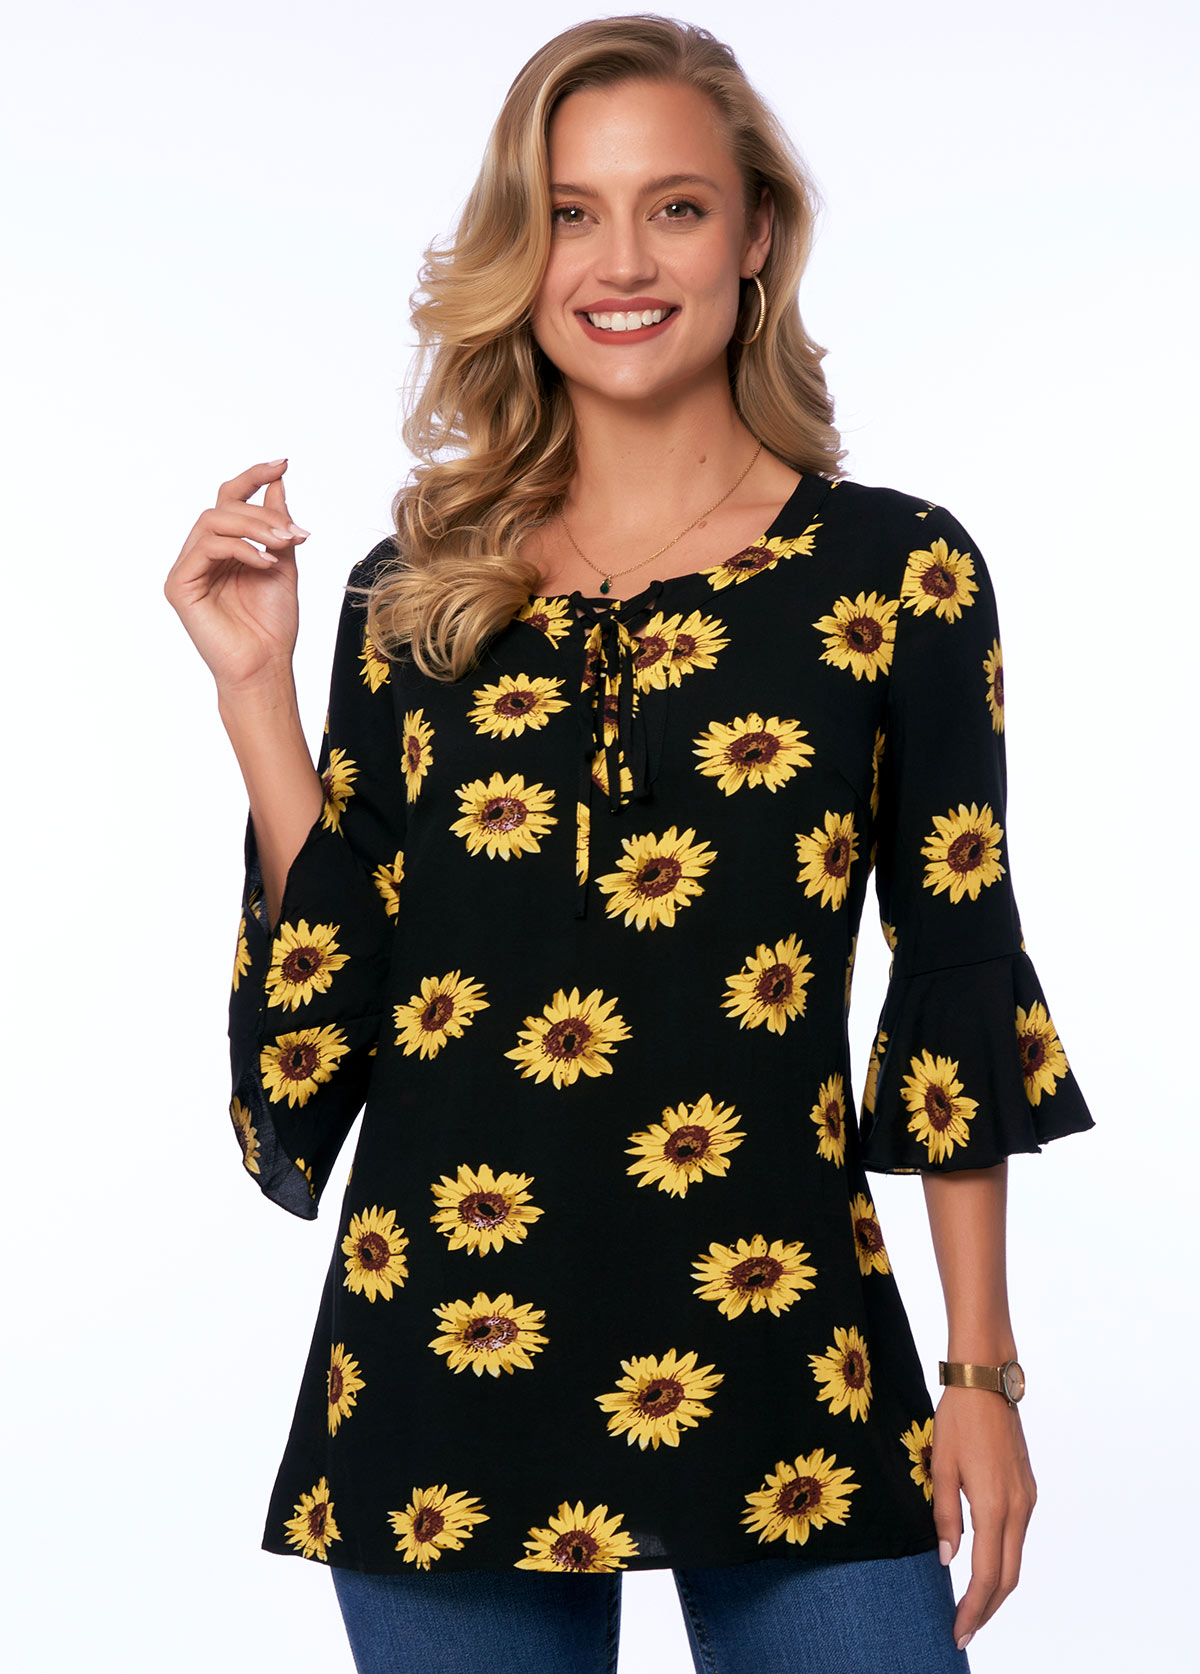 ROTITA Sunflower Print Lace Up 3/4 Sleeve Blouse